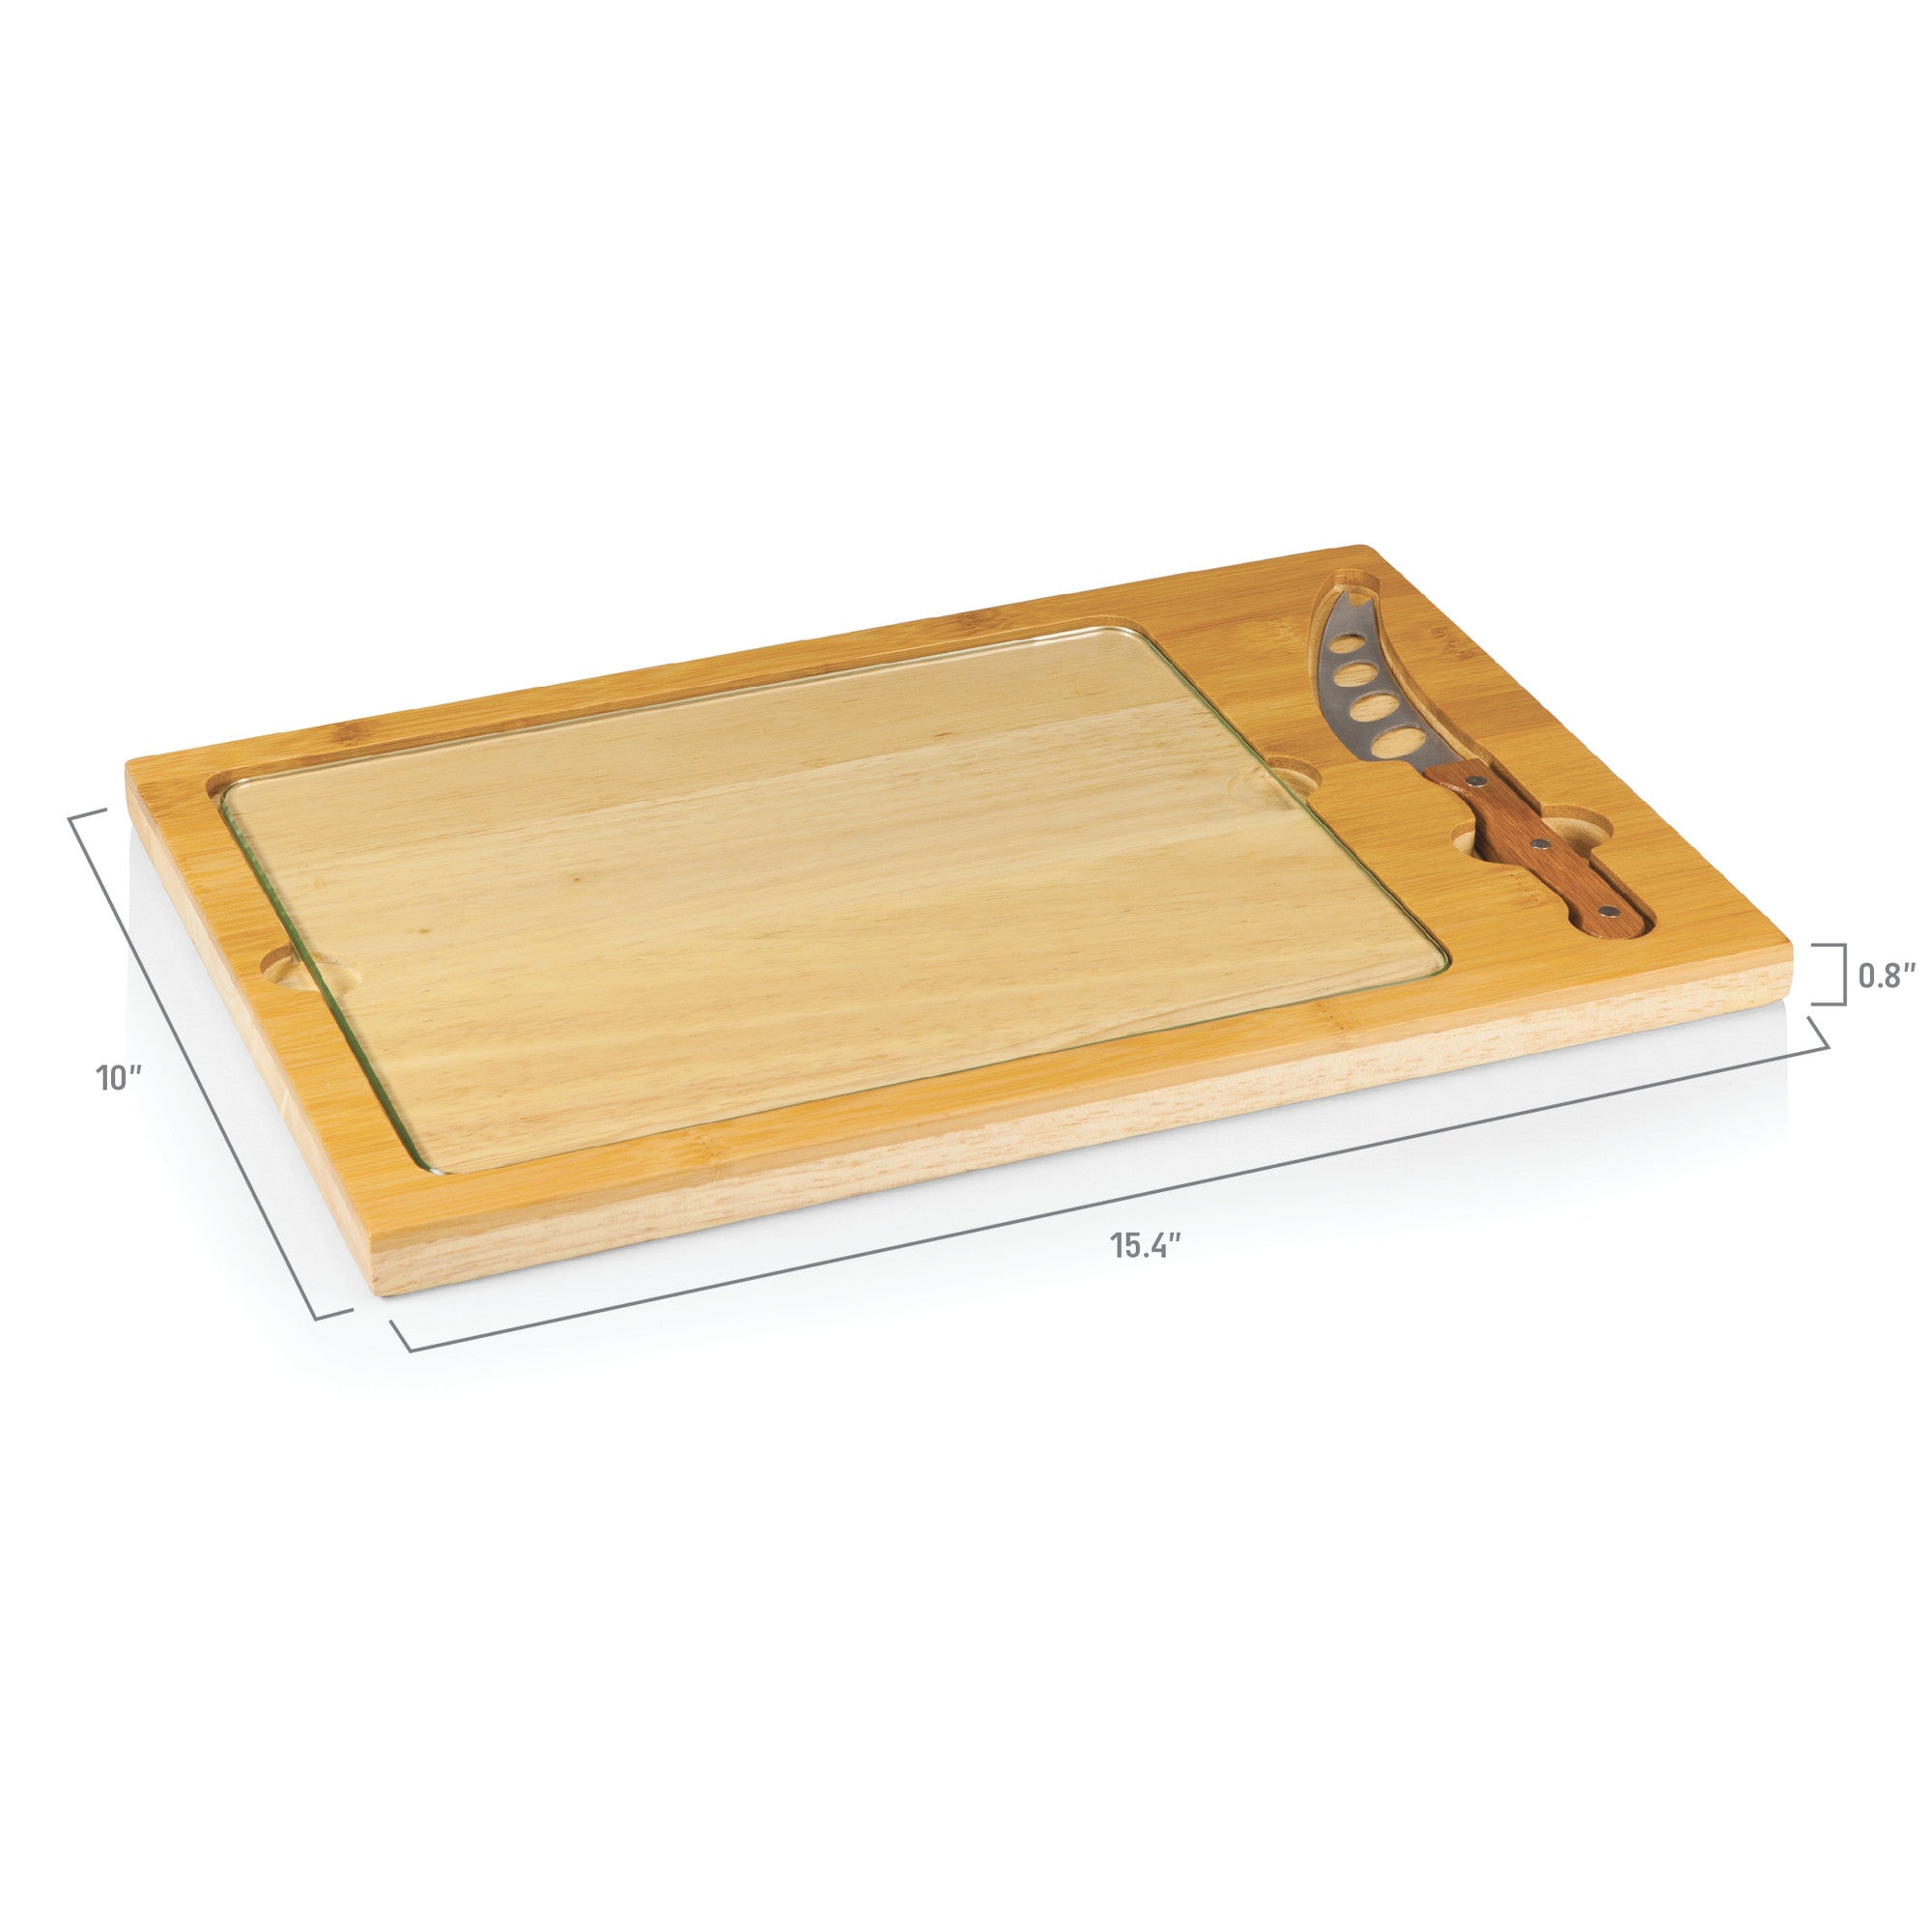 Buffalo Sabres Hockey Rink - Icon Glass Top Cutting Board & Knife Set